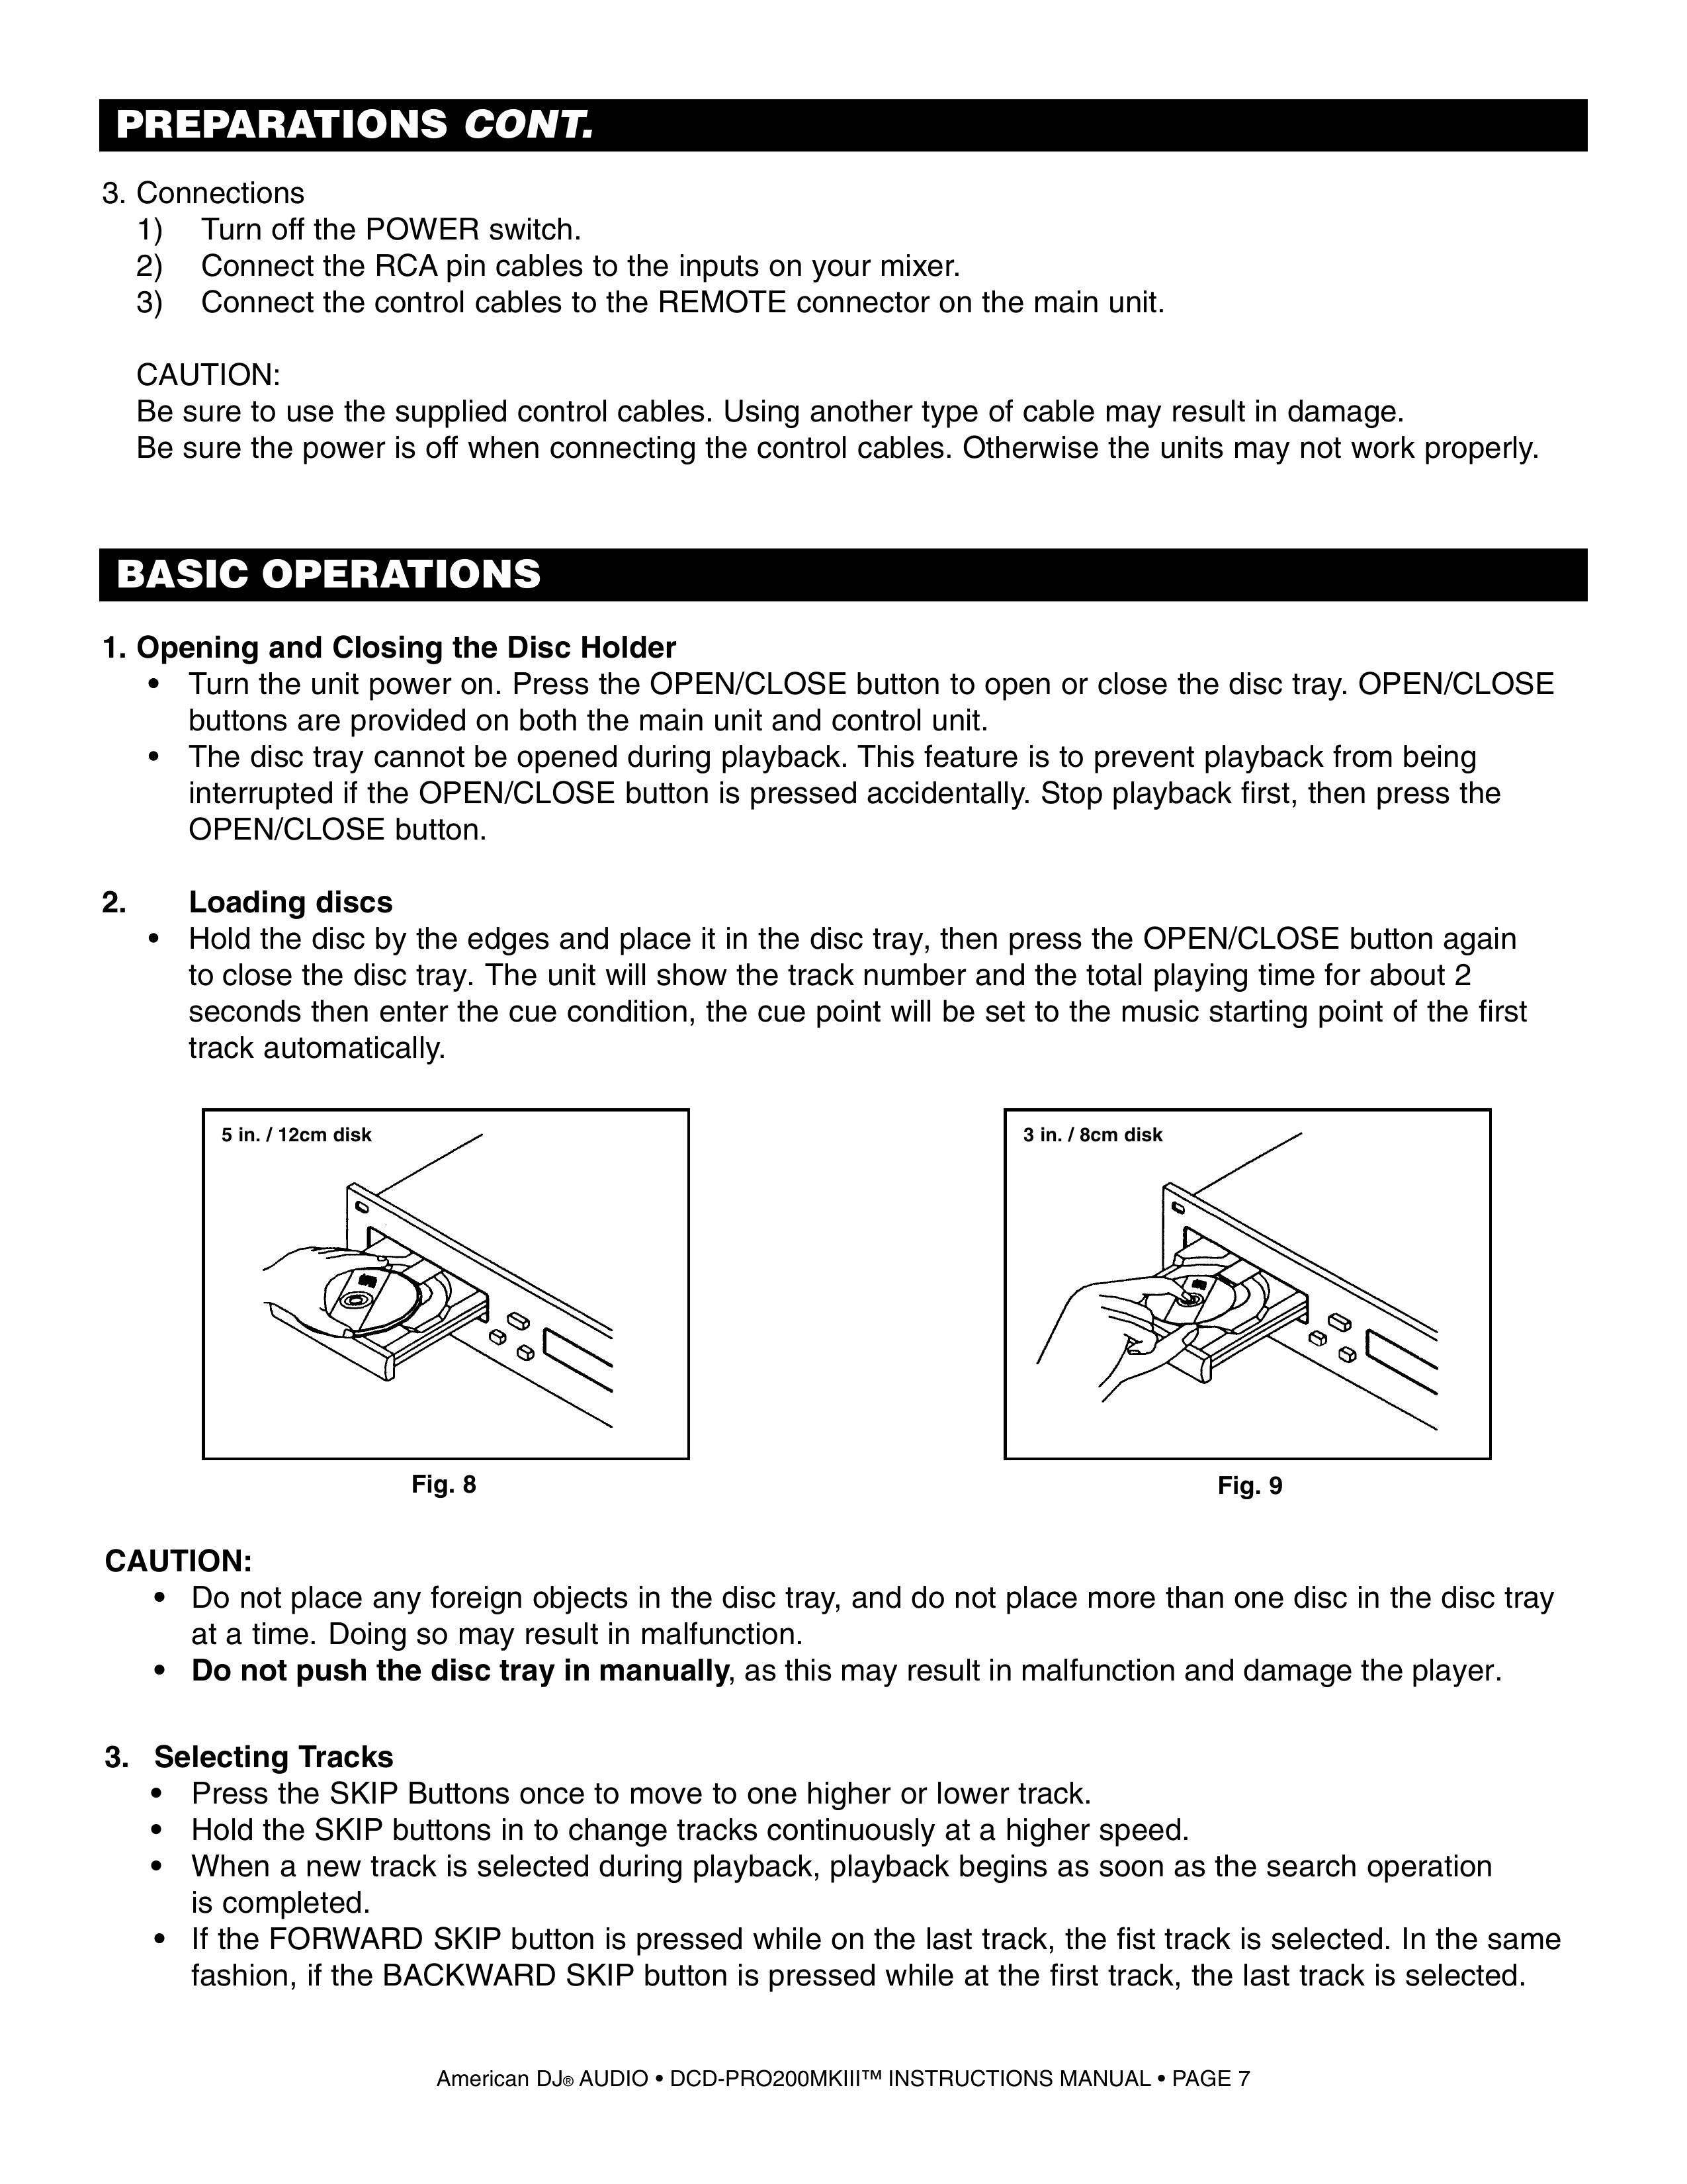 American DJ DCD-PRO200MKIII DJ Equipment User Manual (Page 7)